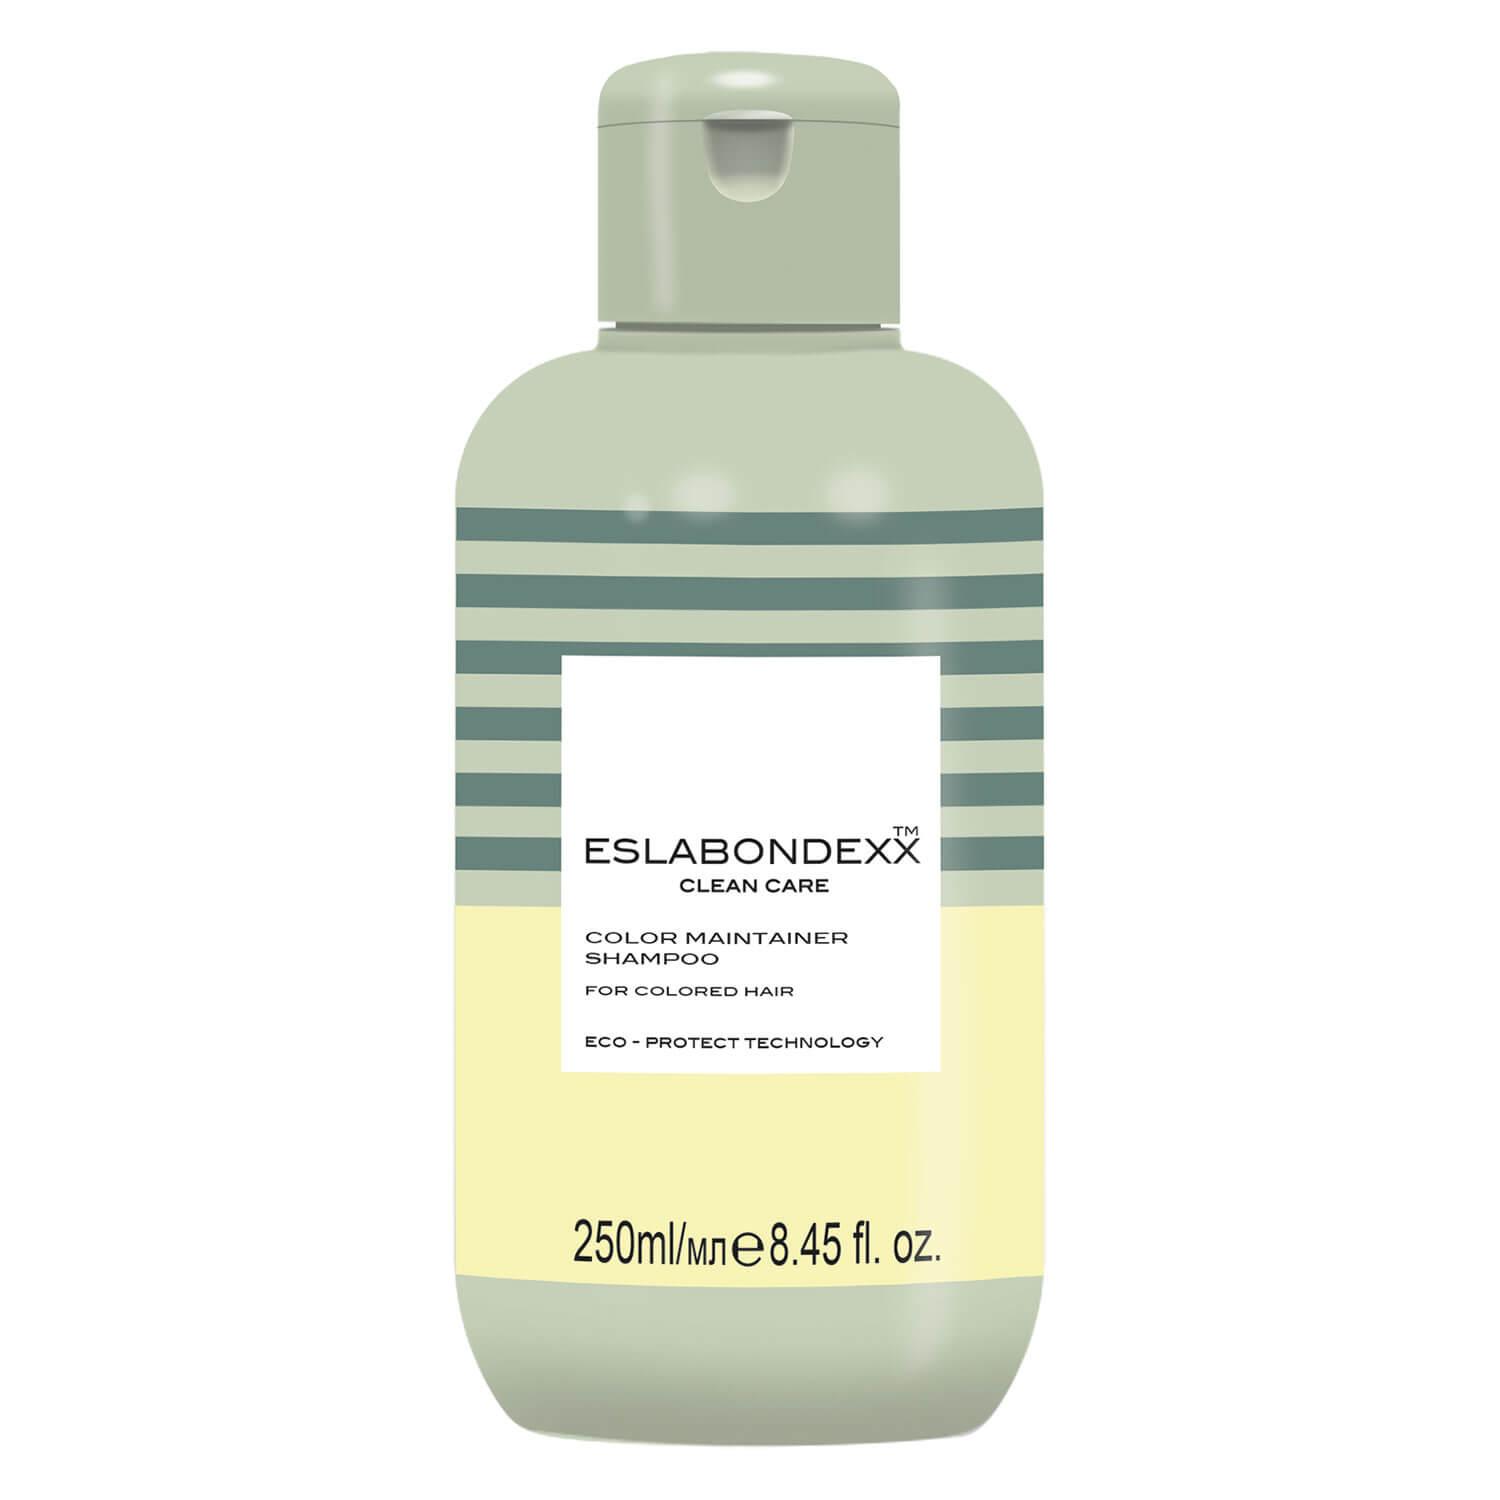 Eslabondexx Clean Care - Color Maintainer Shampoo